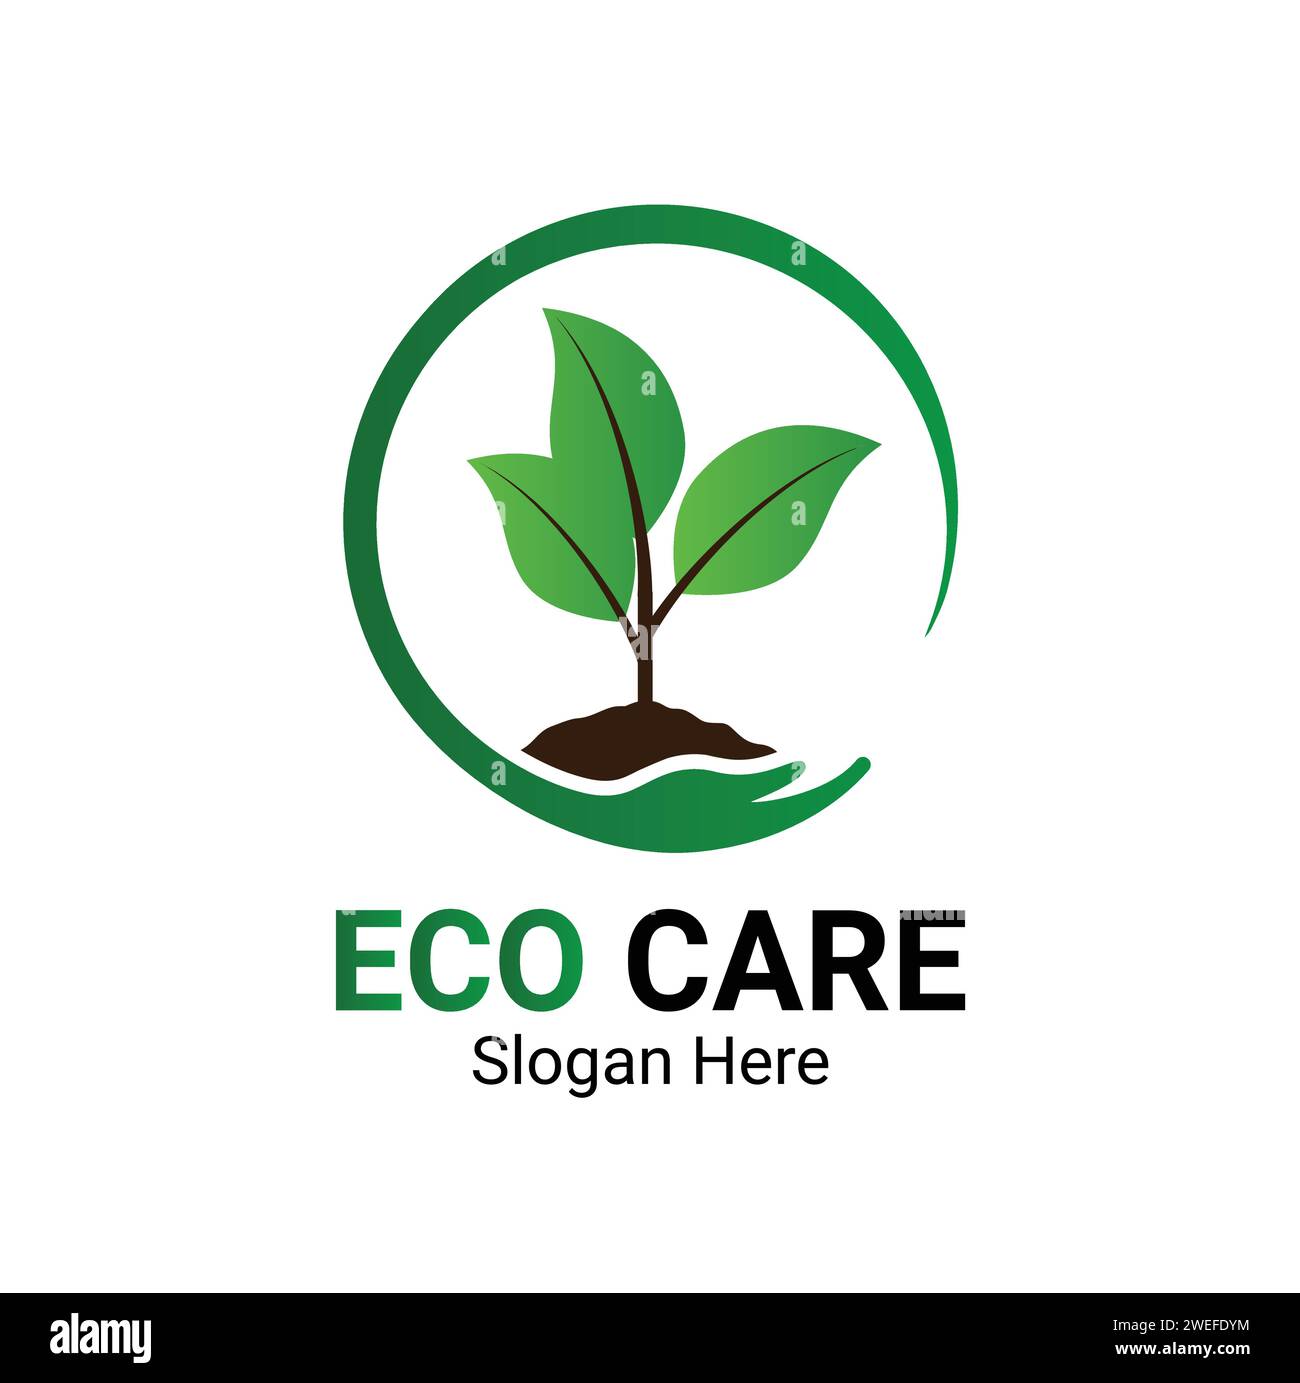 Baum mit Hand and Leaf Eco Care Logo Concept Vector Template Design speichern. Abbildung des Symbols für das Natural Care-Logo. Stock Vektor